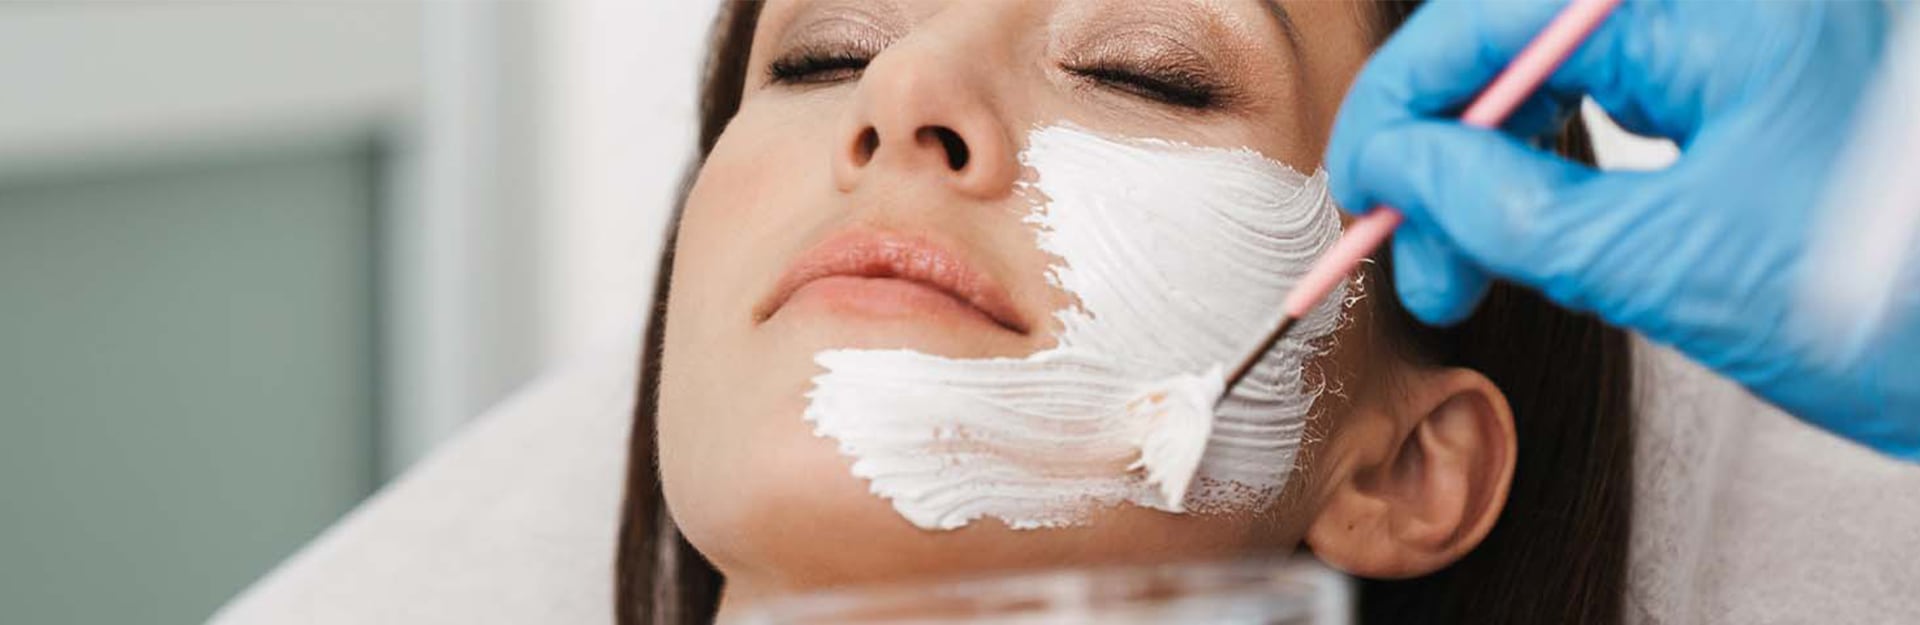 woman receiving facial treatment at luxurious spa.